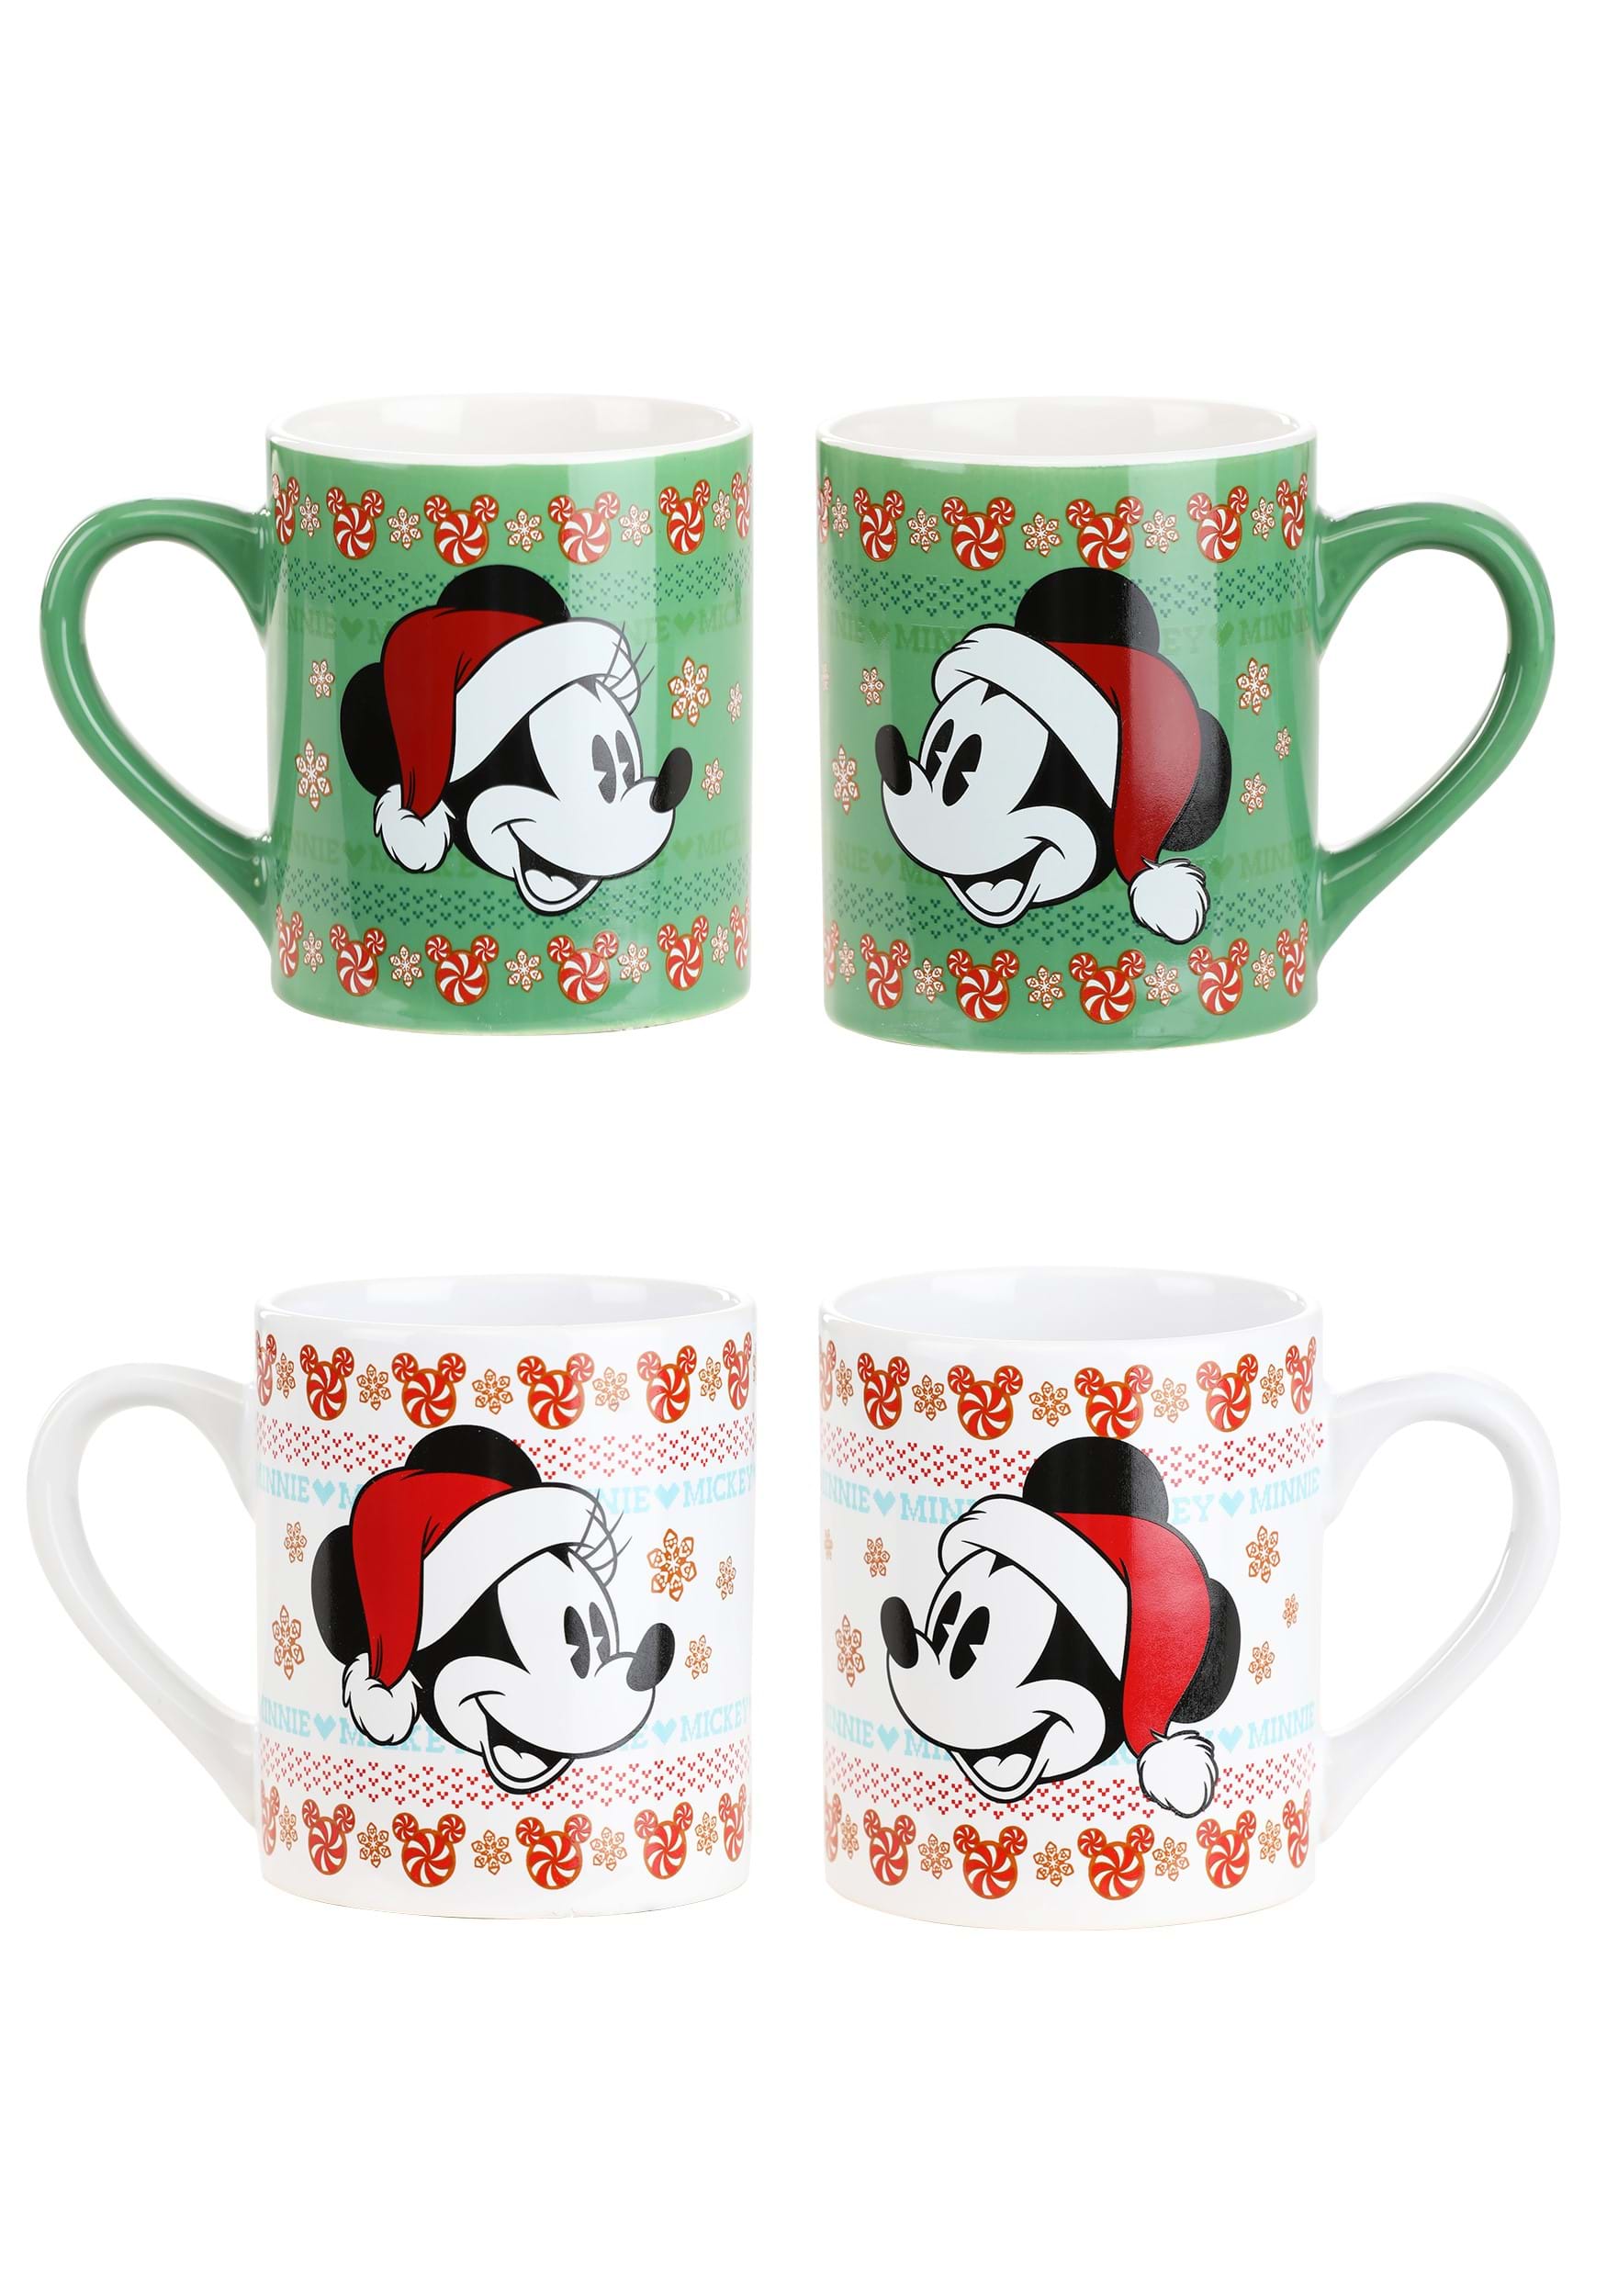 https://images.fun.com/products/80020/2-1-211095/disney-christmas-14oz-ceramic-mug-2-pack-alt-5.jpg